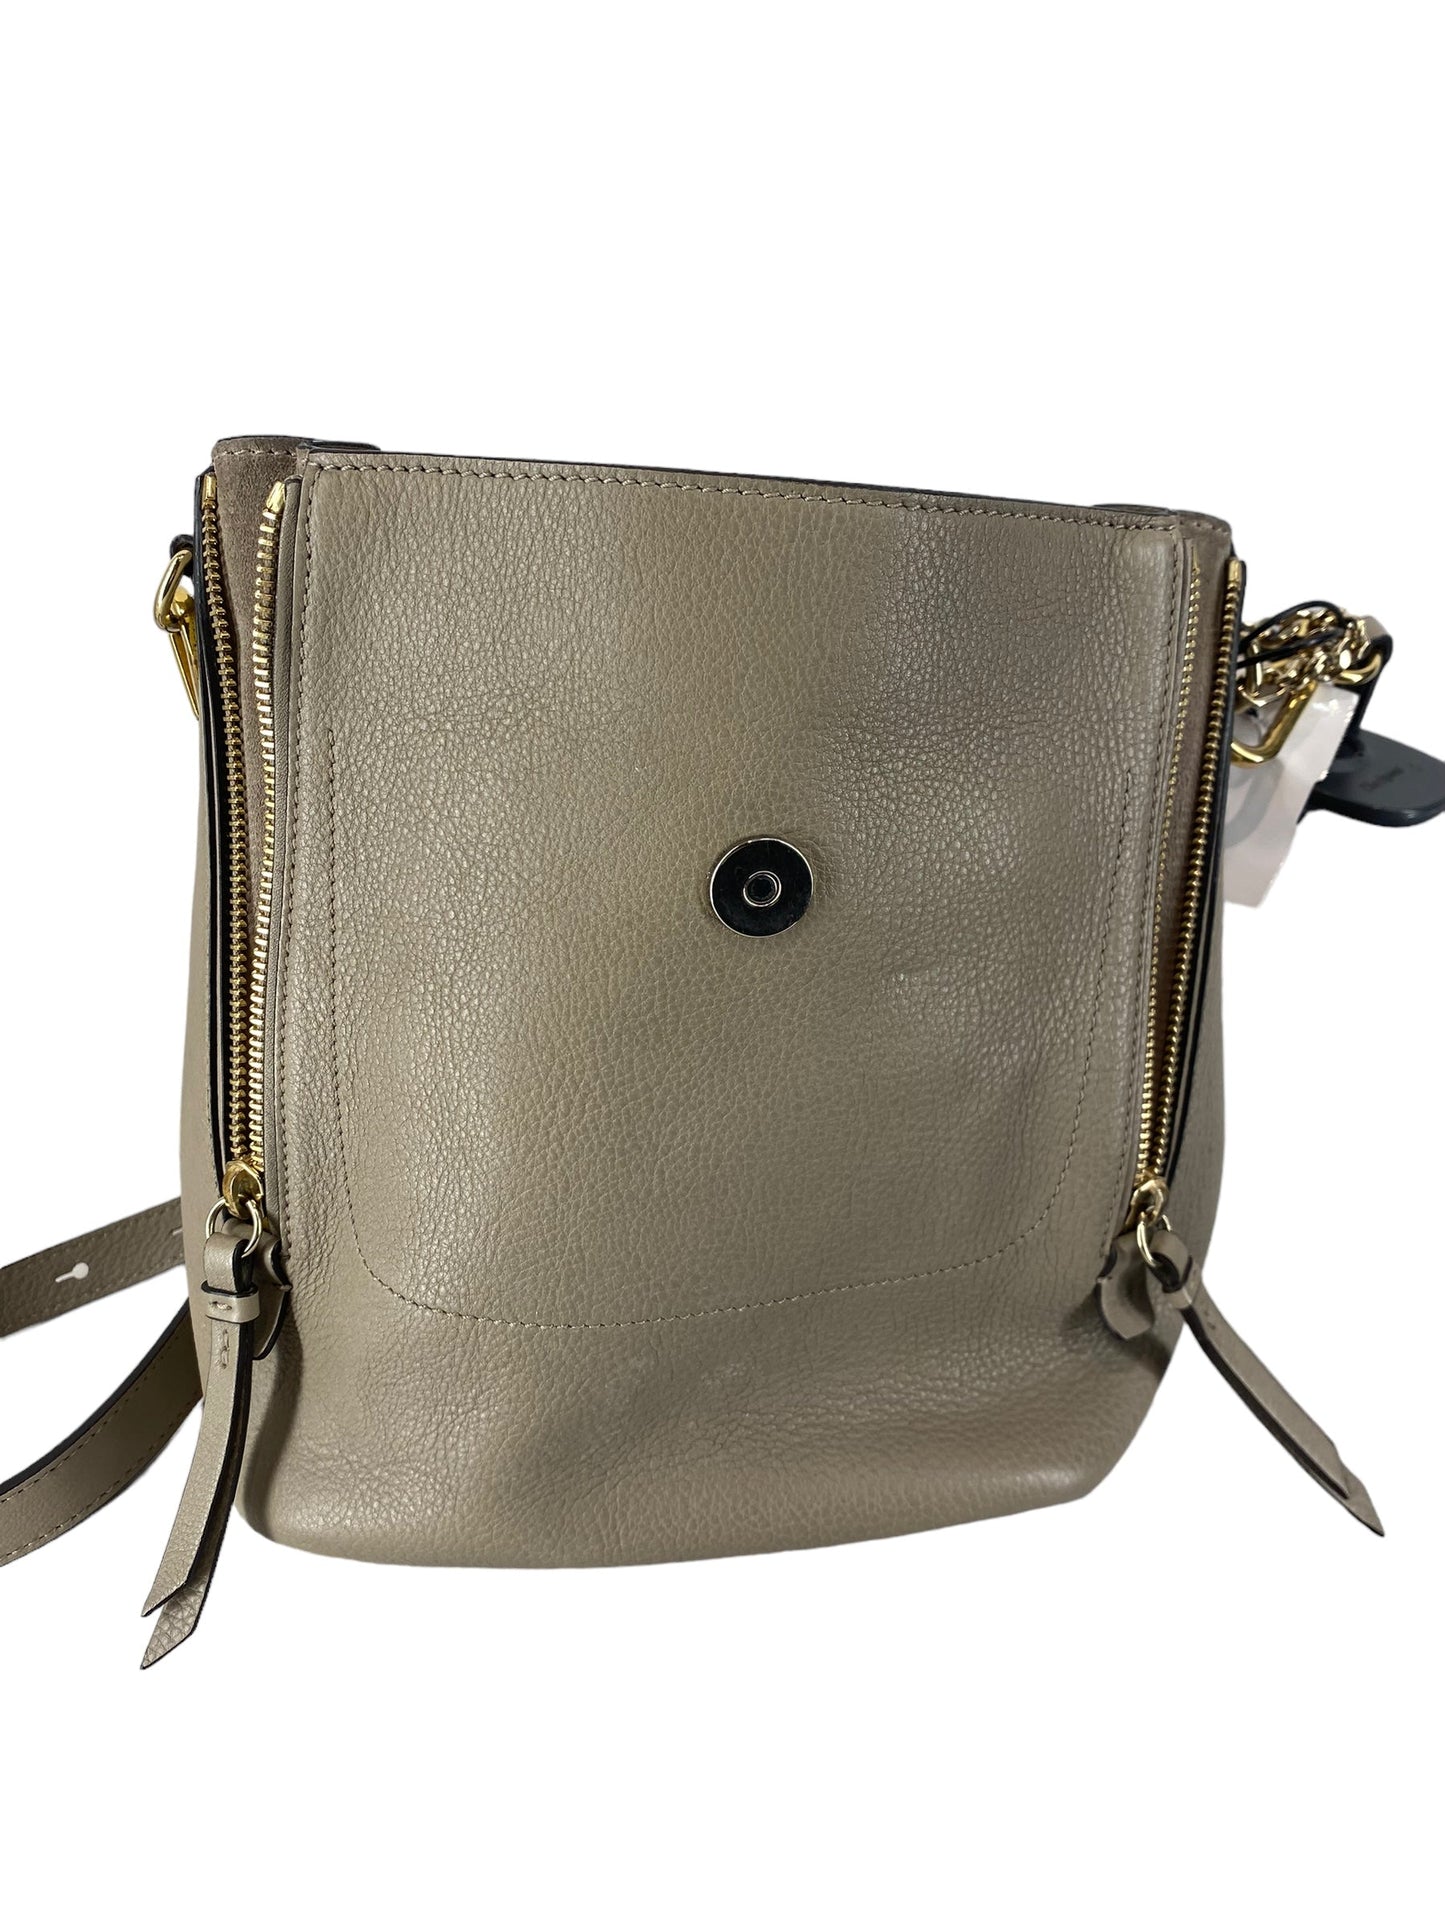 Backpack Luxury Designer By Chloe  Size: Medium